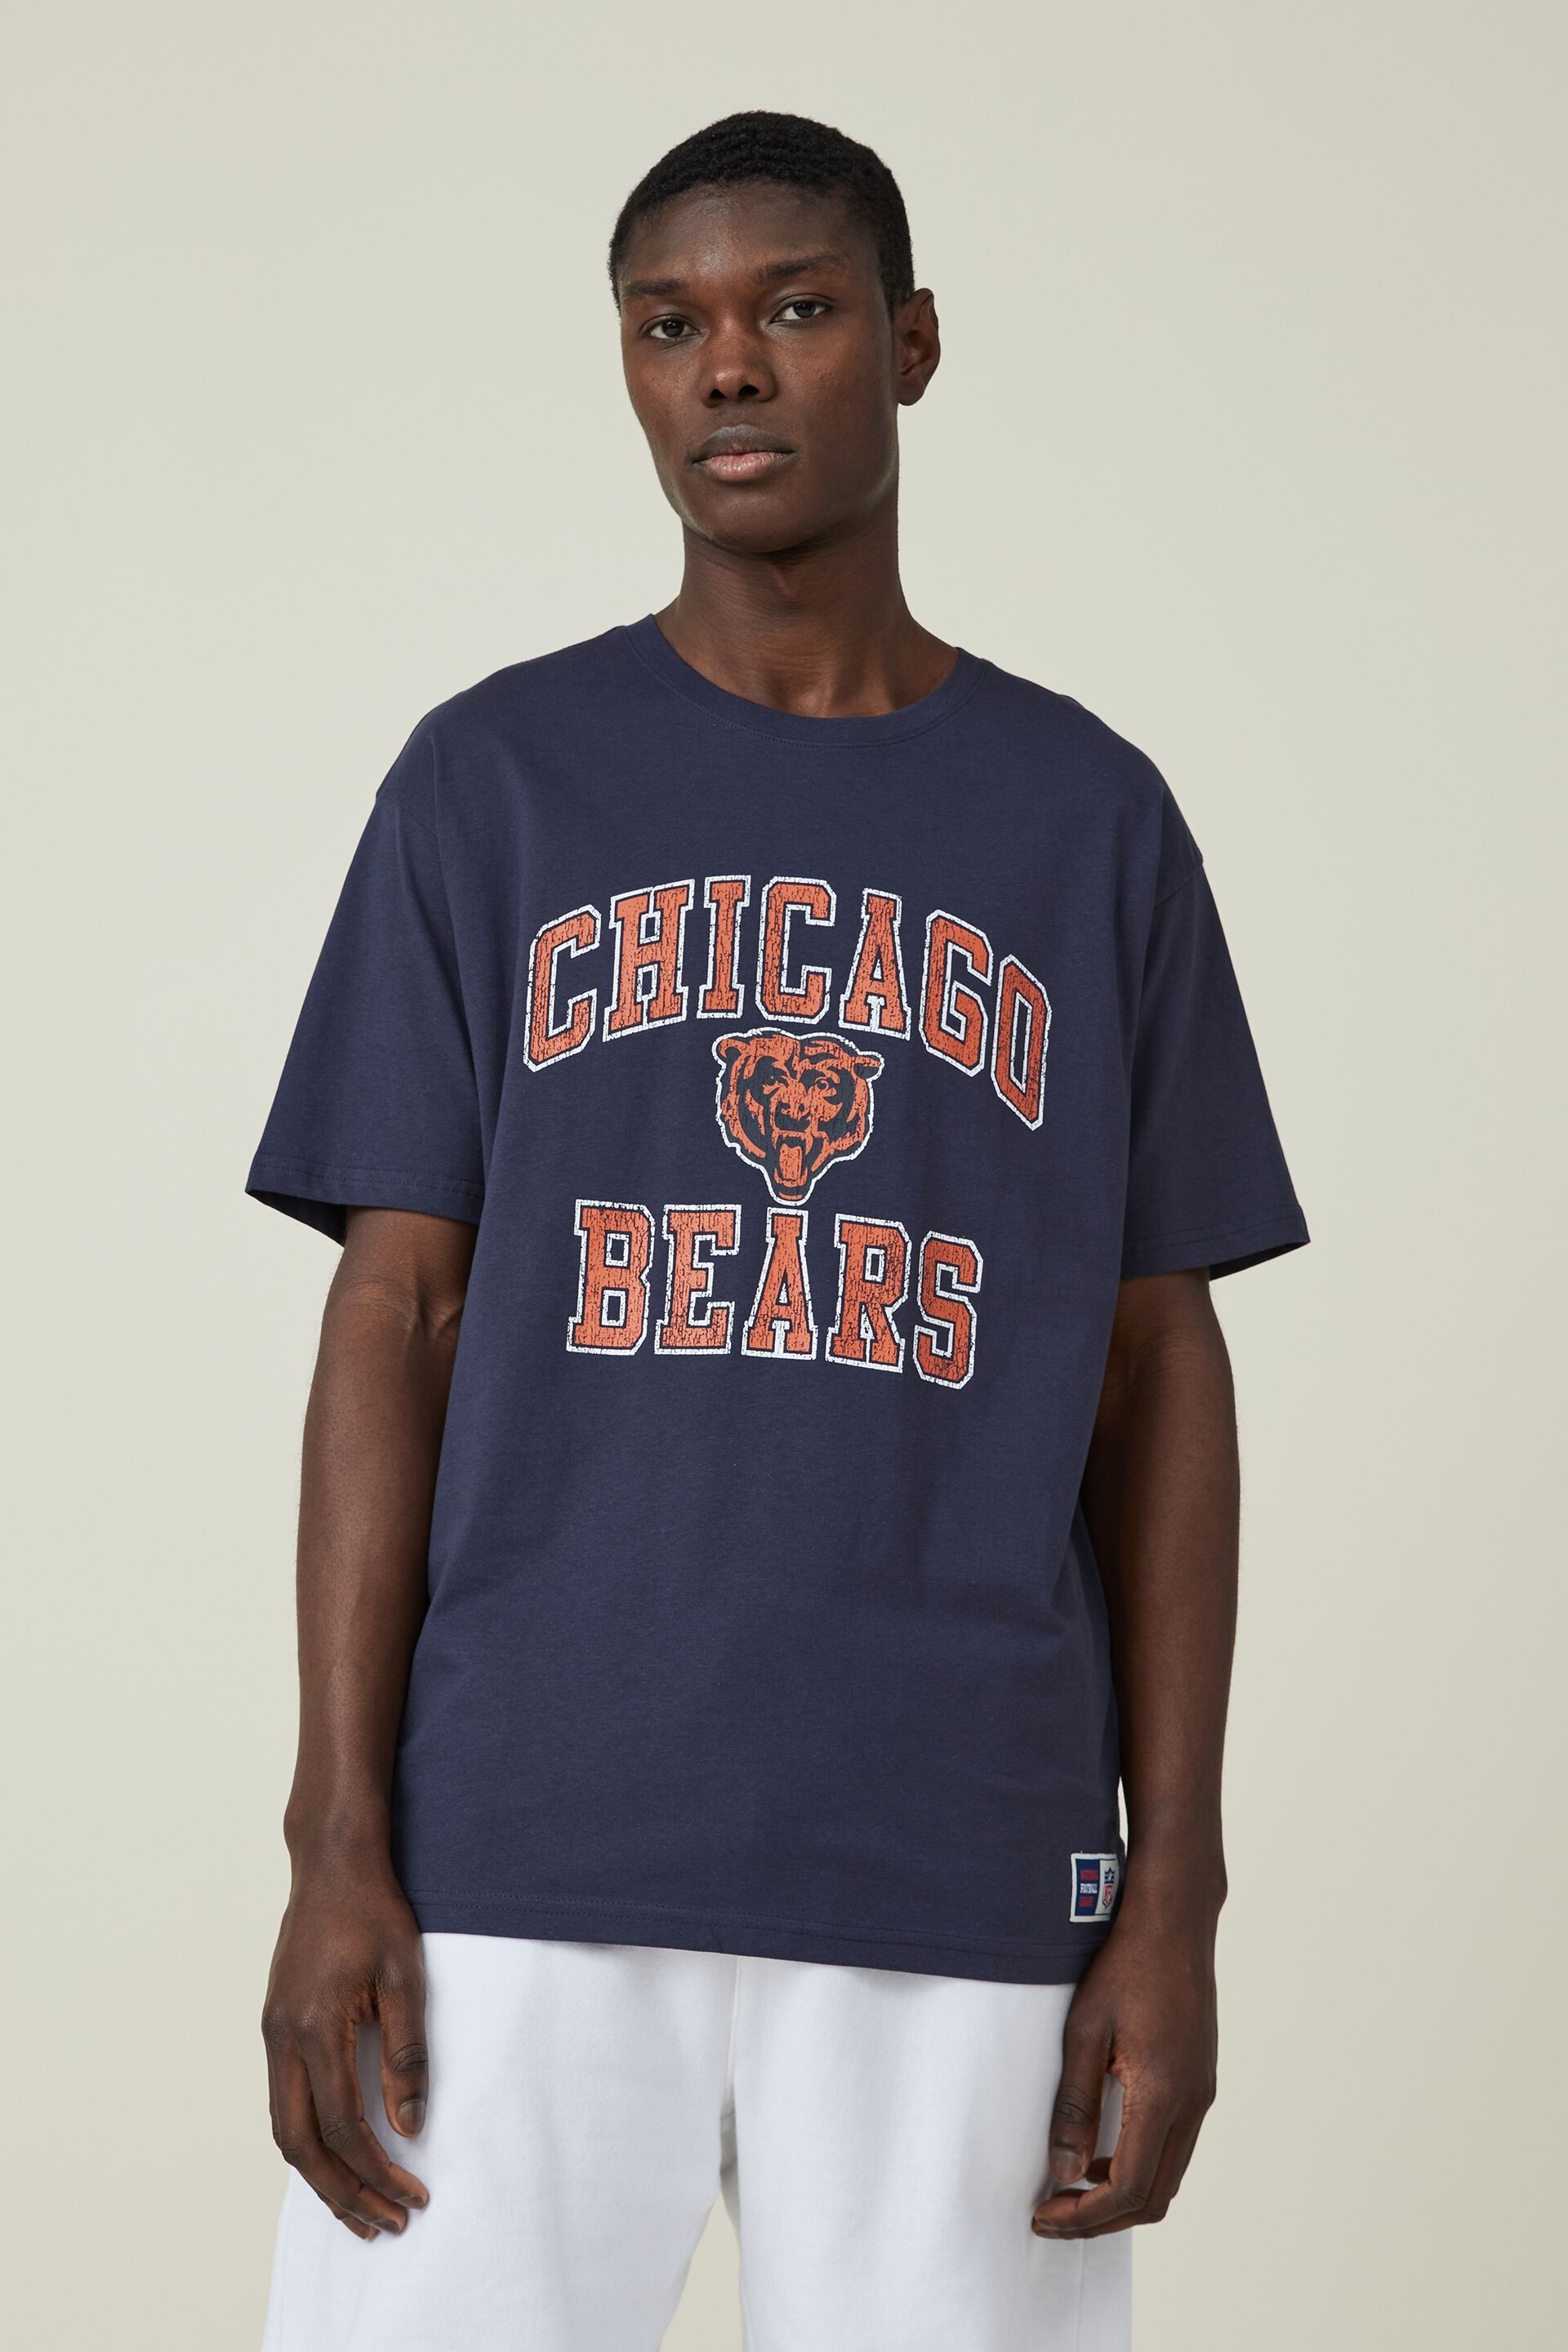 34% off on Men's Chicago Bears Active Oversized T-Shirt